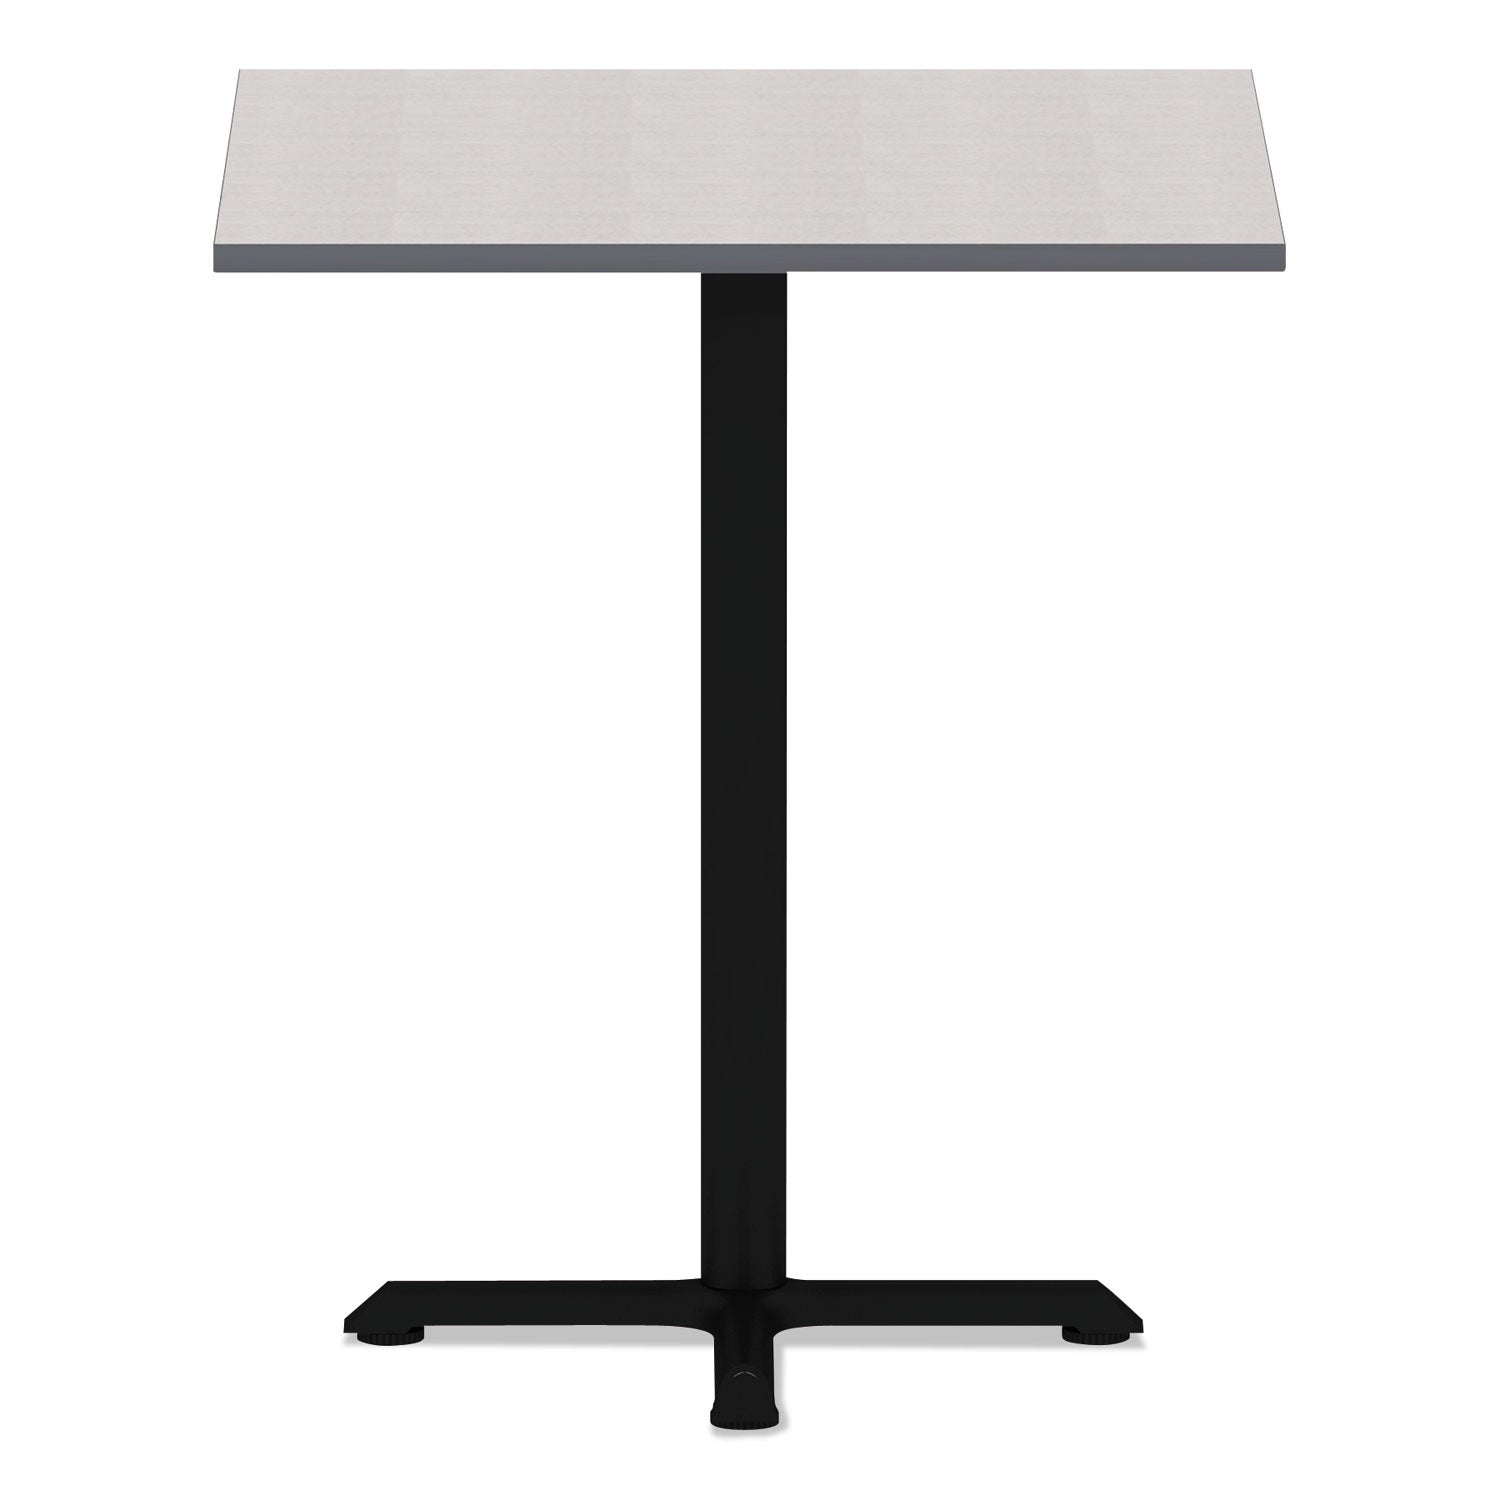 reversible-laminate-table-top-square-3538w-x-3538d-white-gray_alettsq36wg - 1